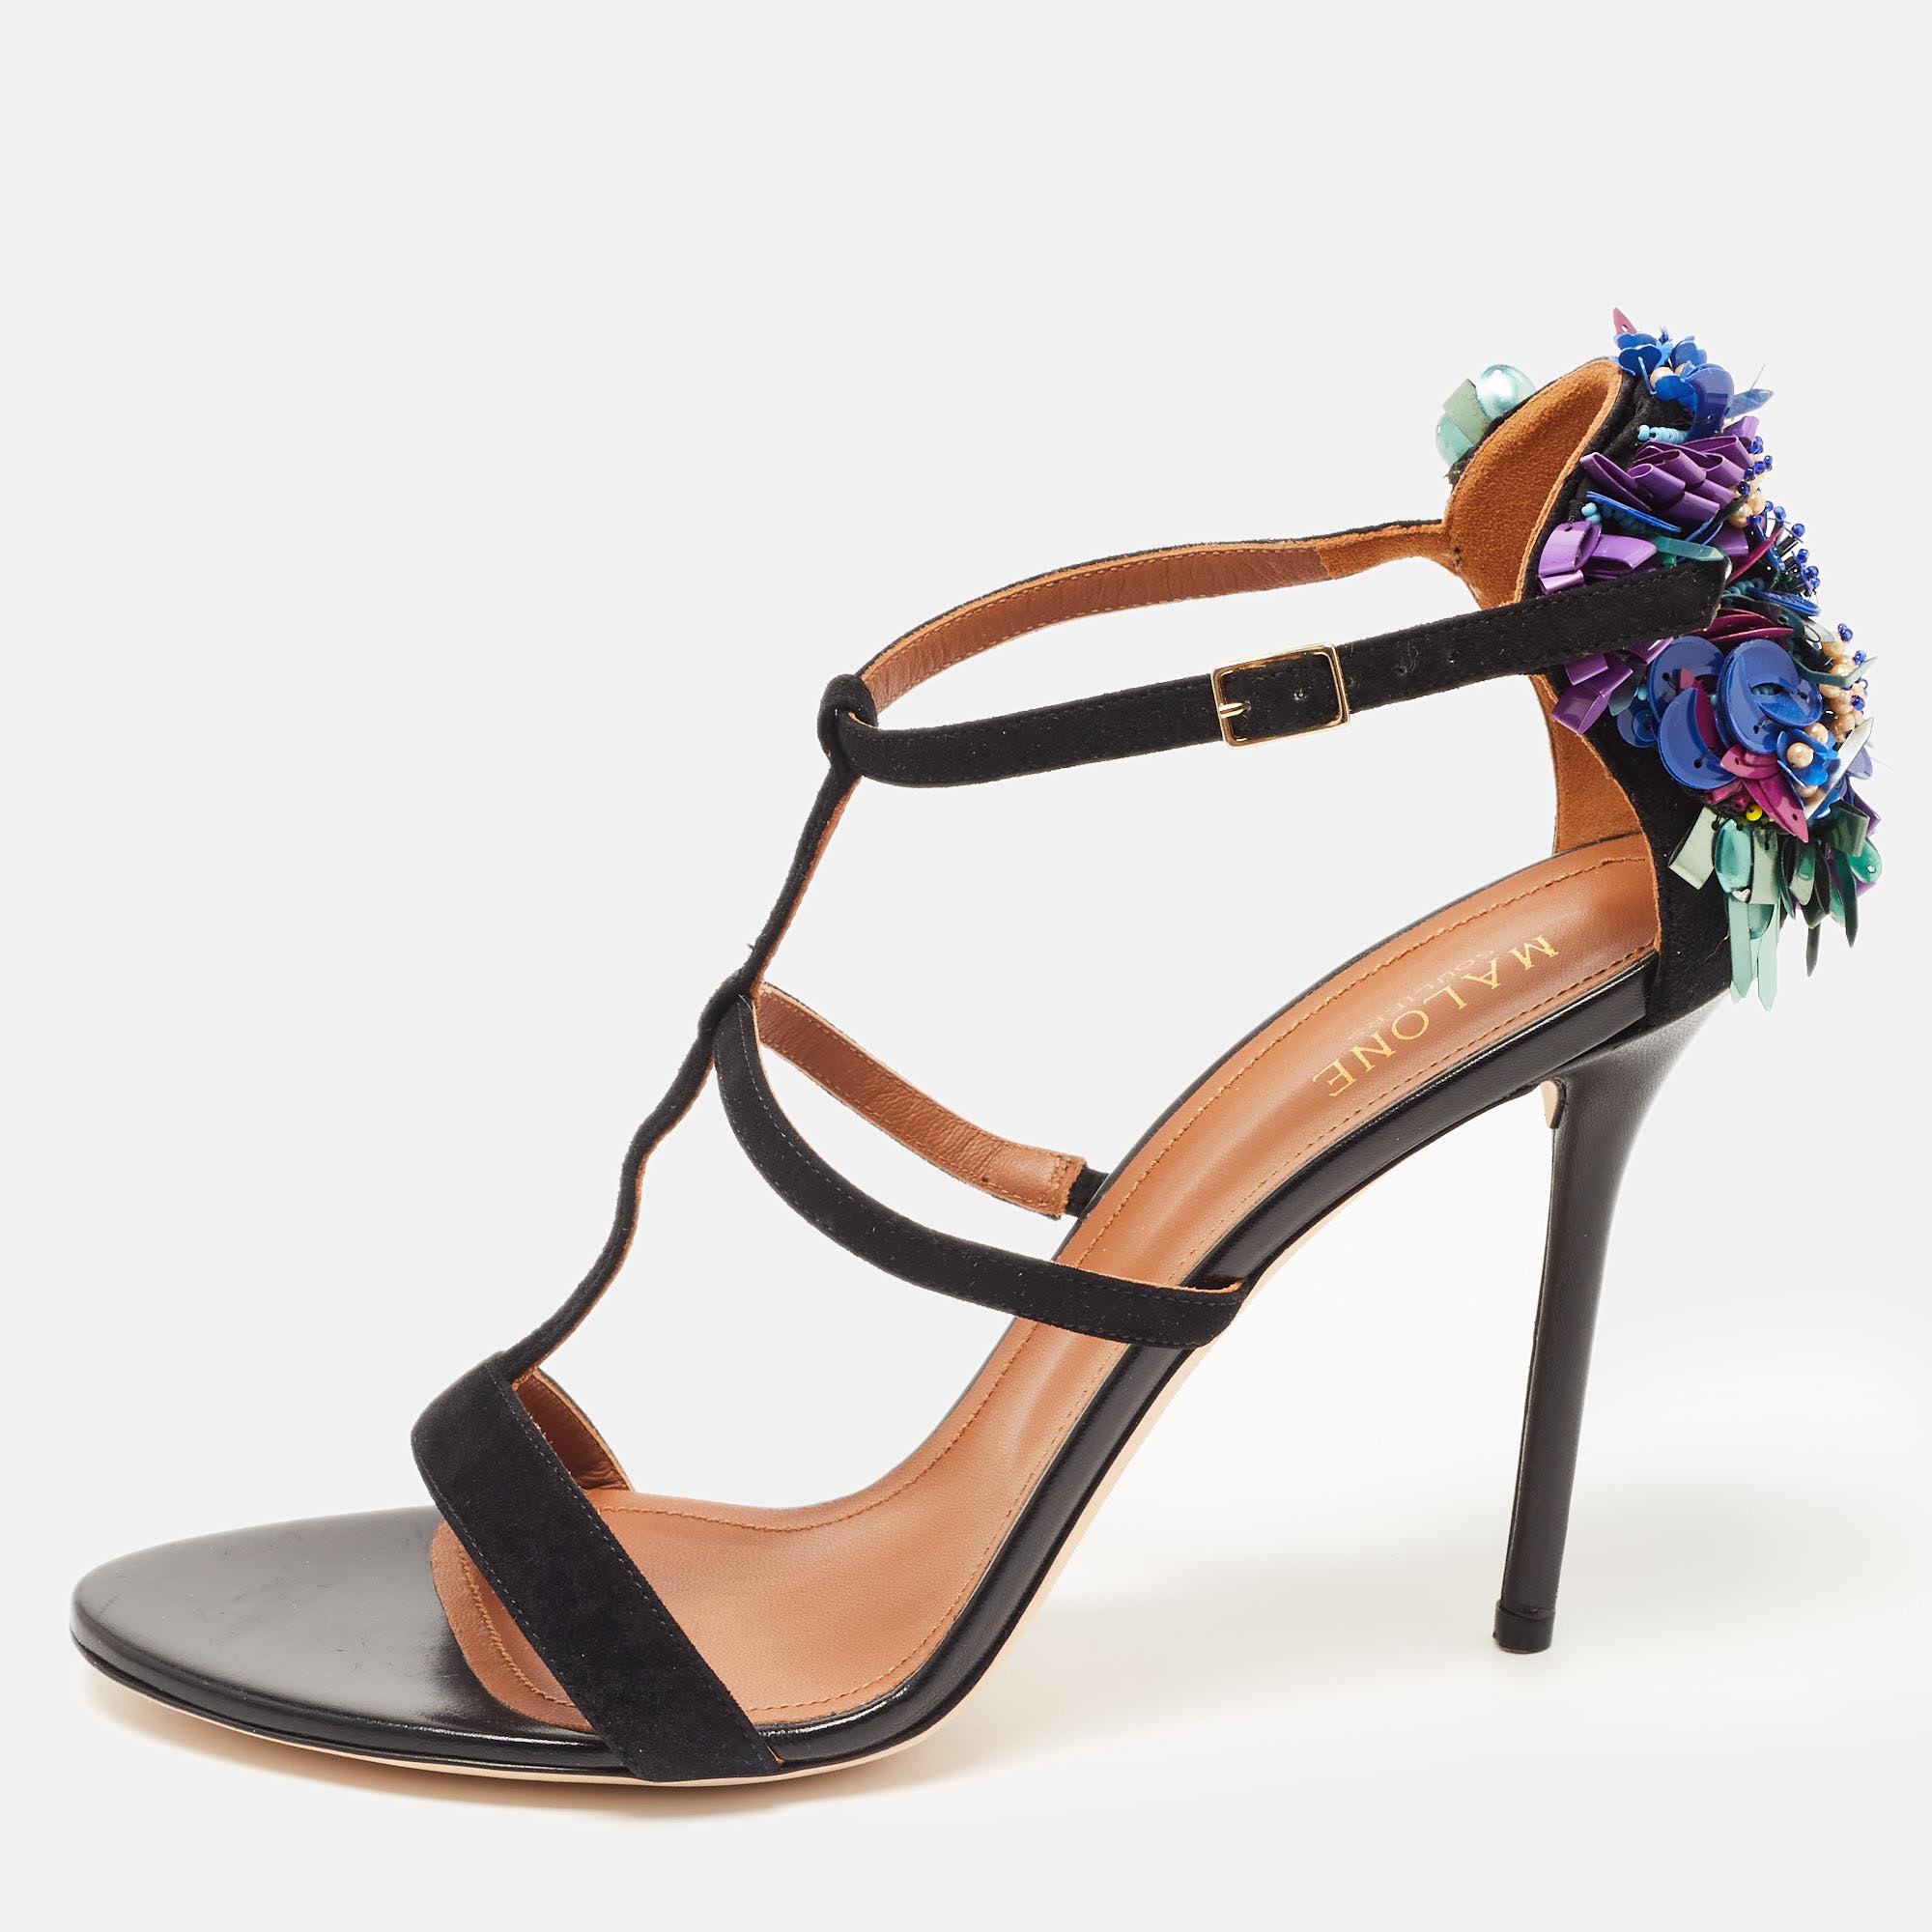 Malone souliers black suede floral embellished ankle strap sandals size 41